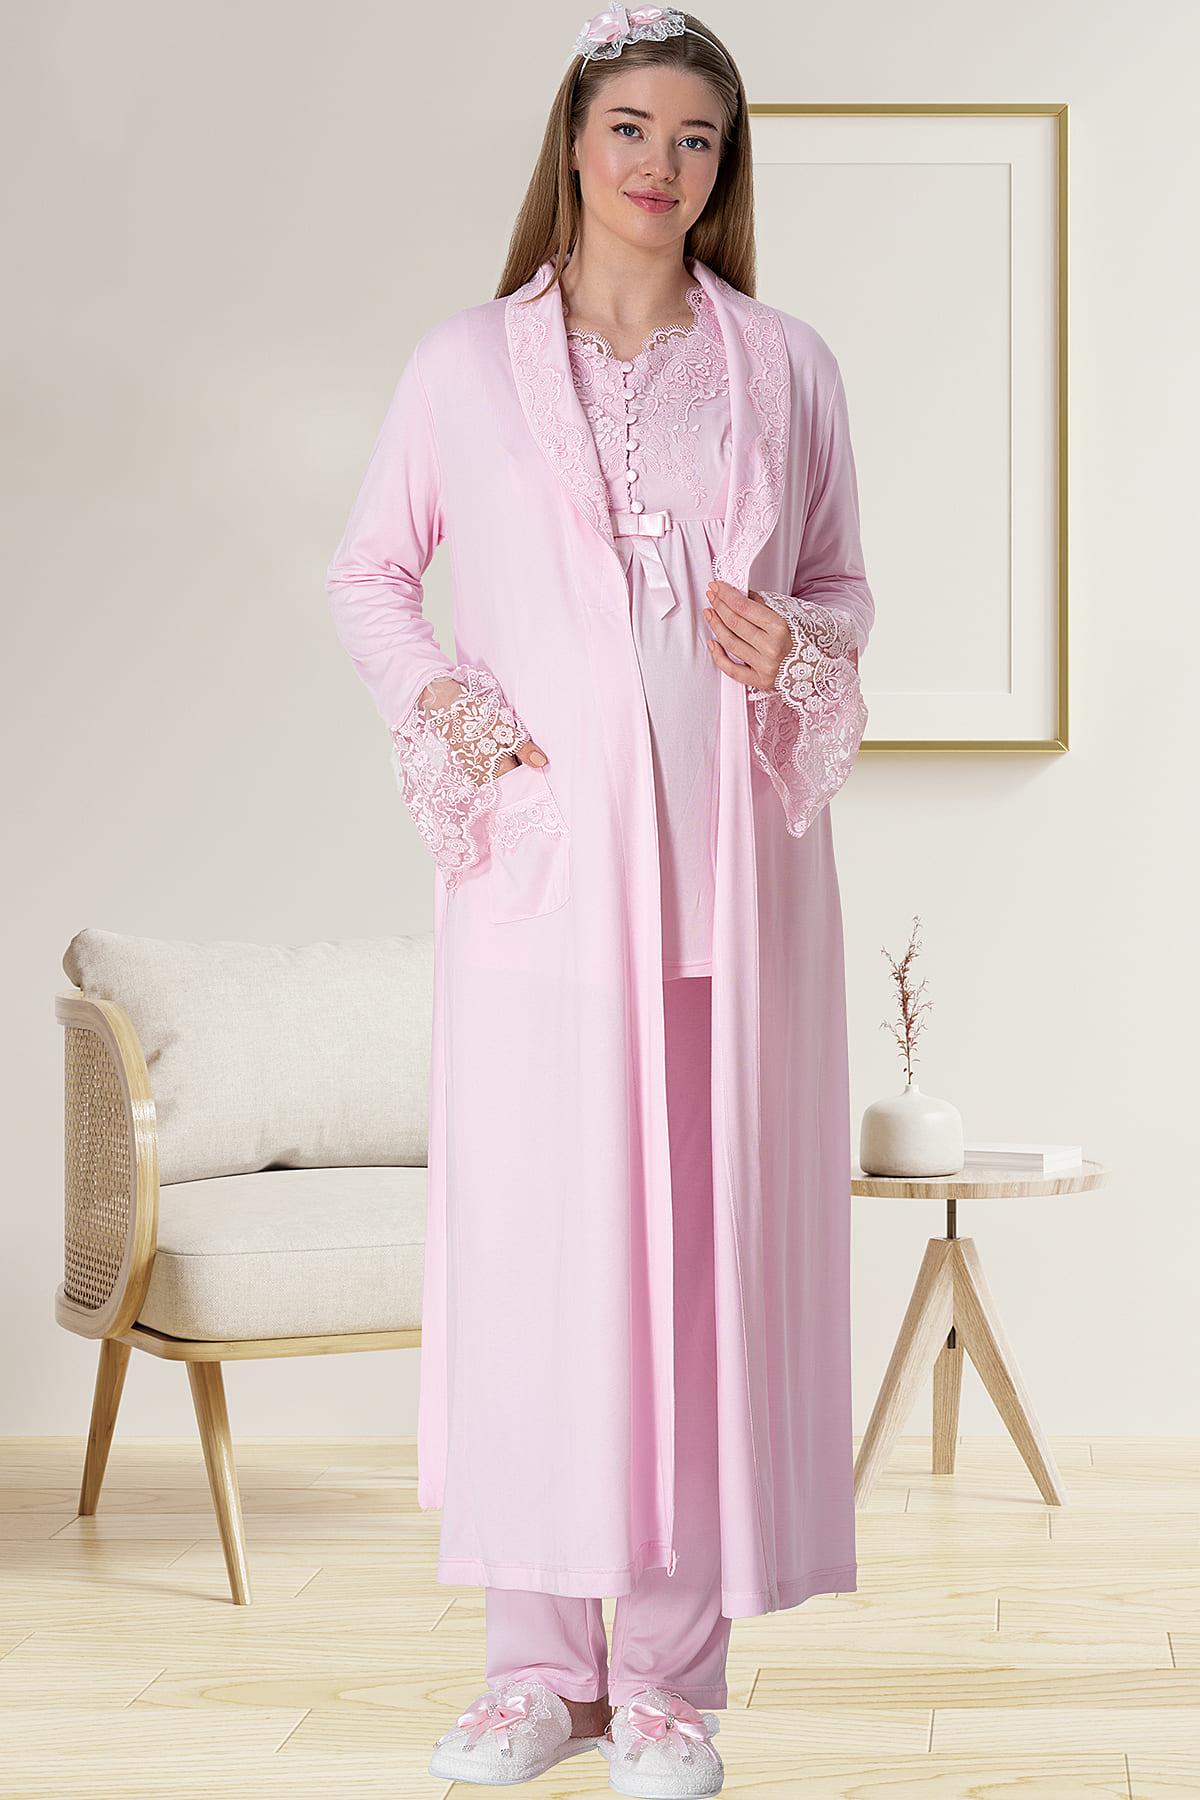 Shopymommy 5416 Elegant Lace 3-Pieces Maternity & Nursing Pajamas With Robe Pink